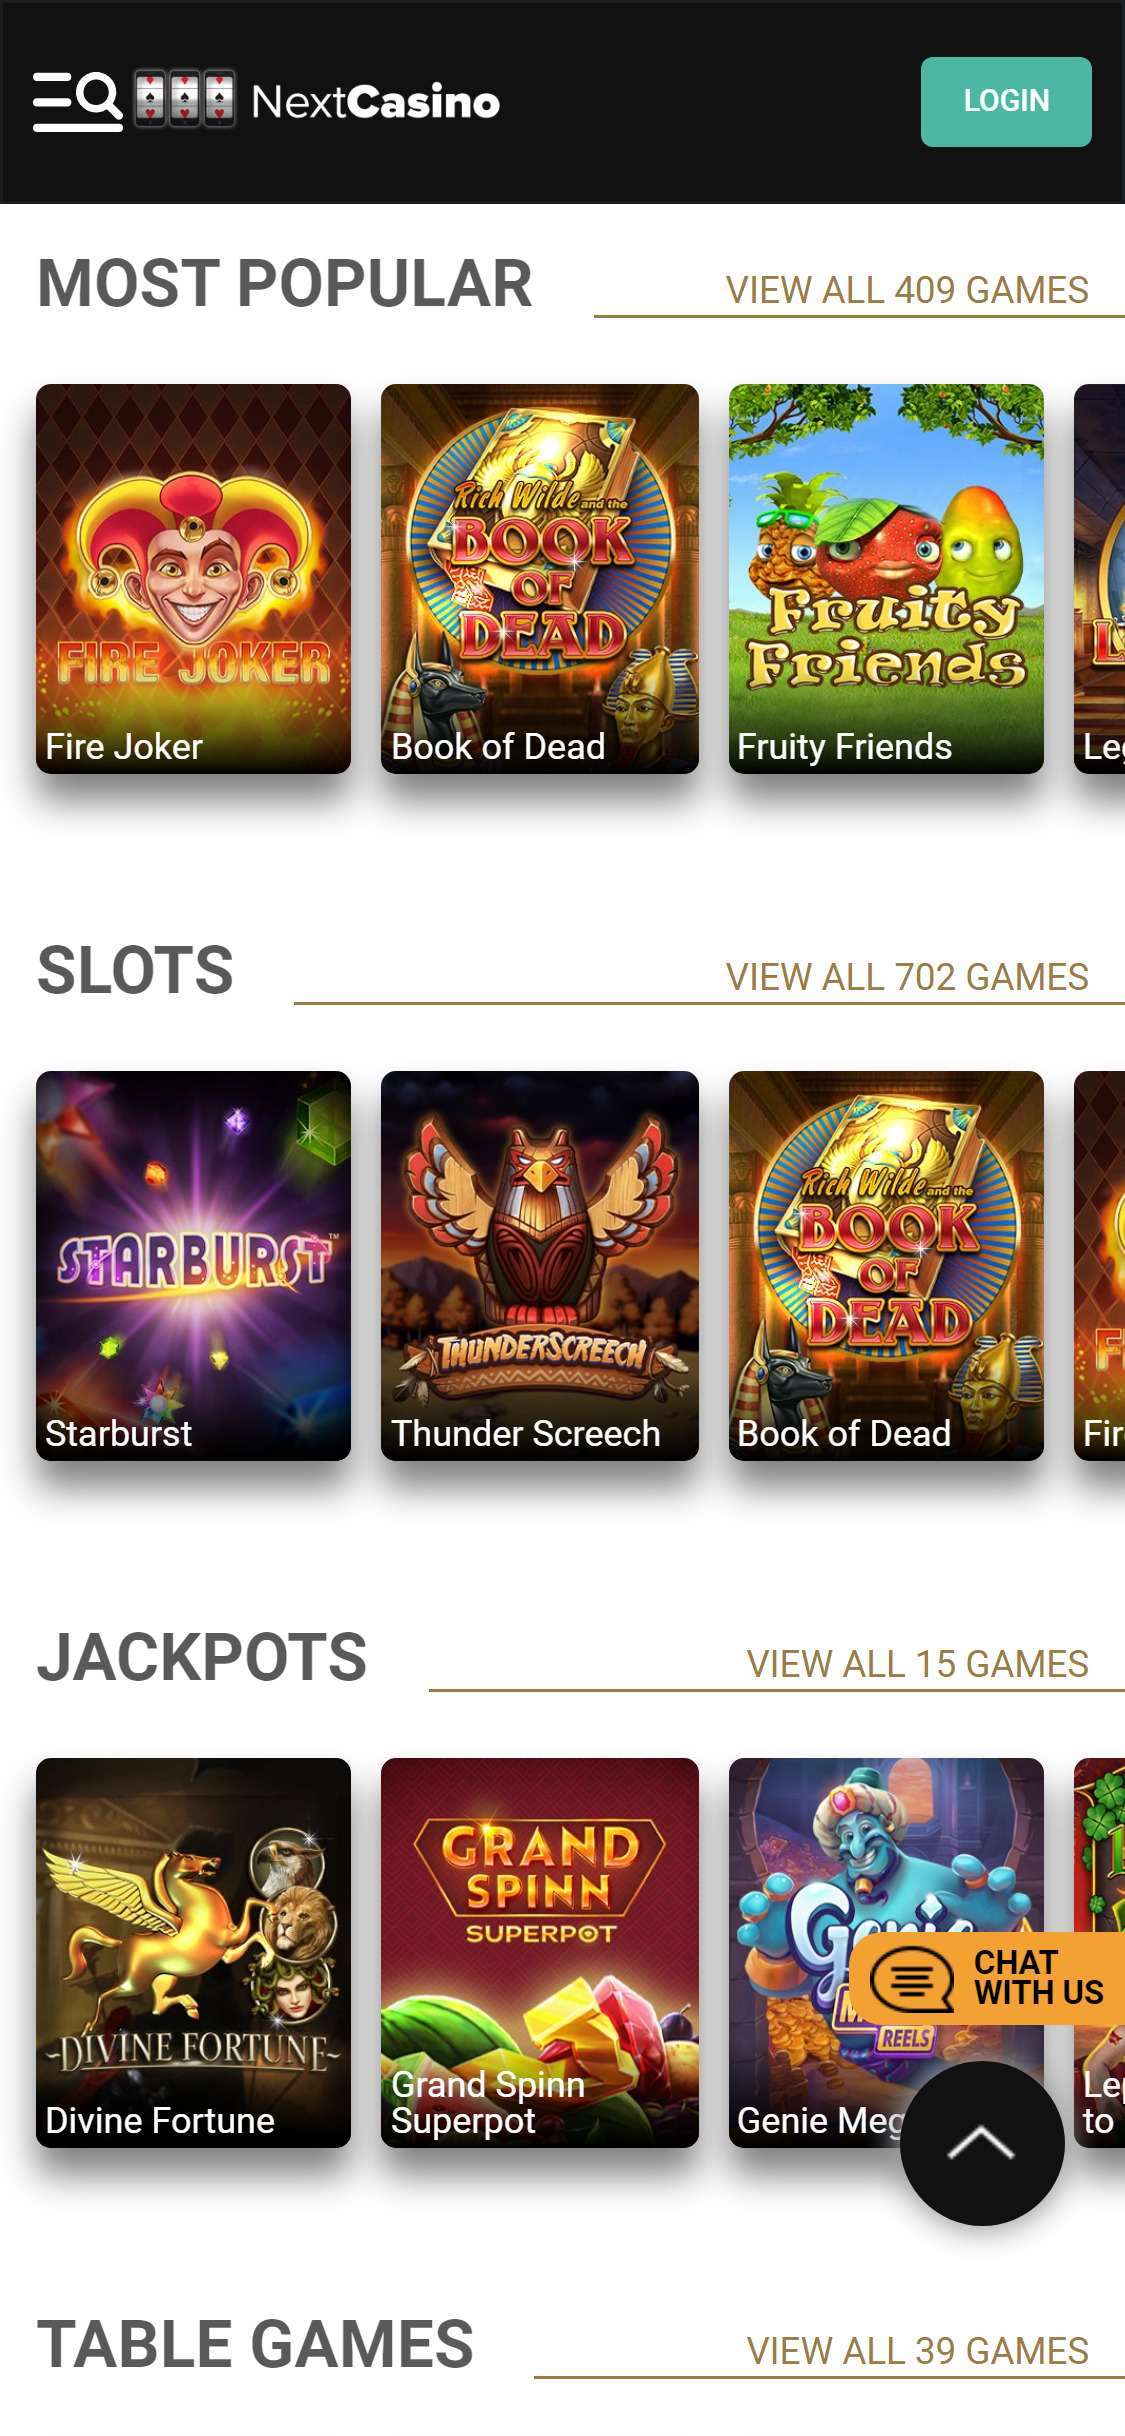 Next Casino Mobile Games Review